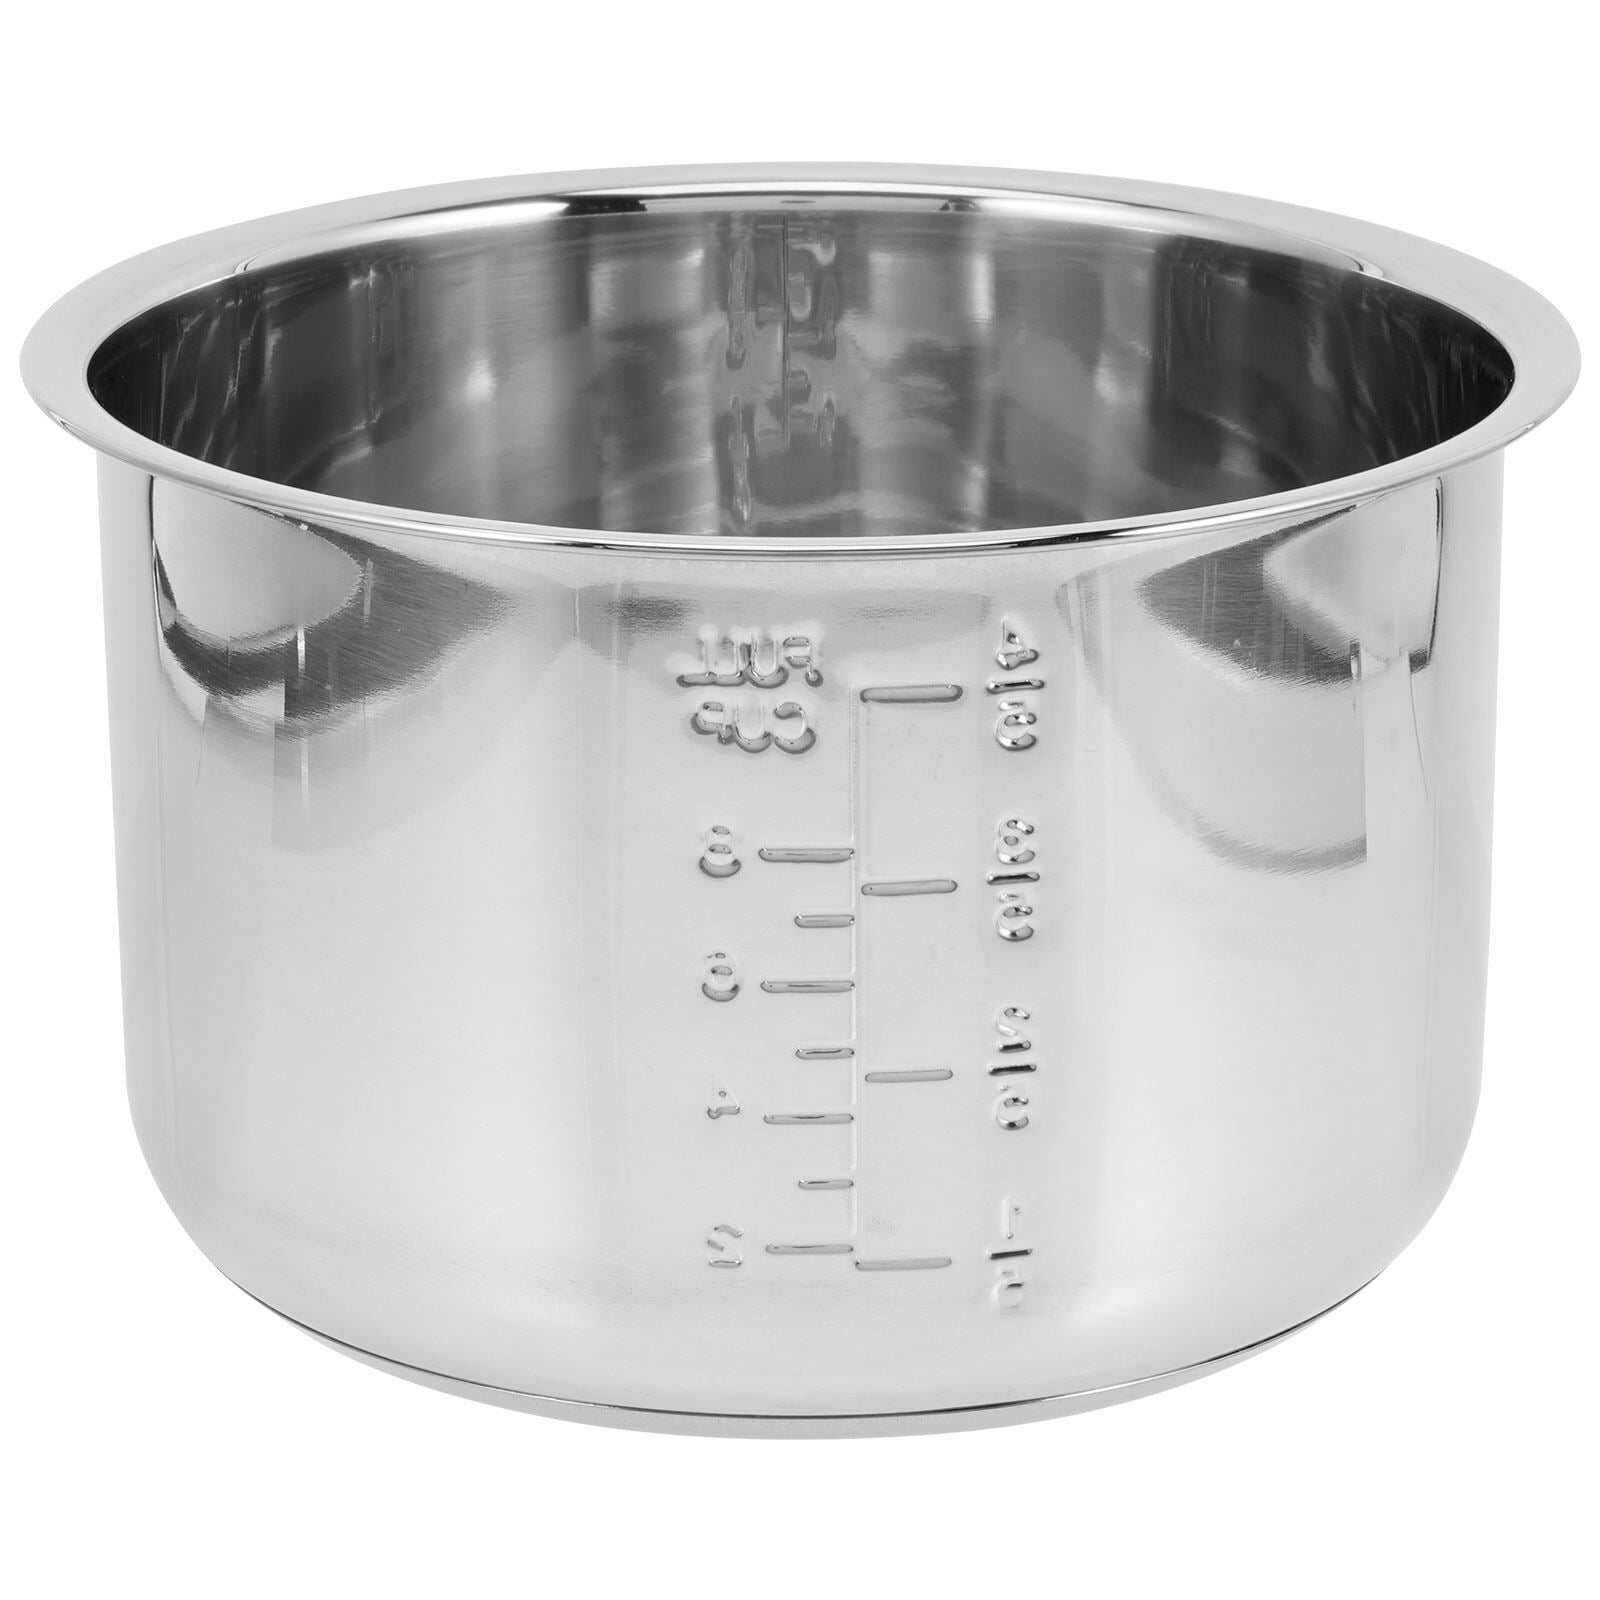  UPKOCH Rice Cooker Inner Pot 5L Pressure Cooker Liner